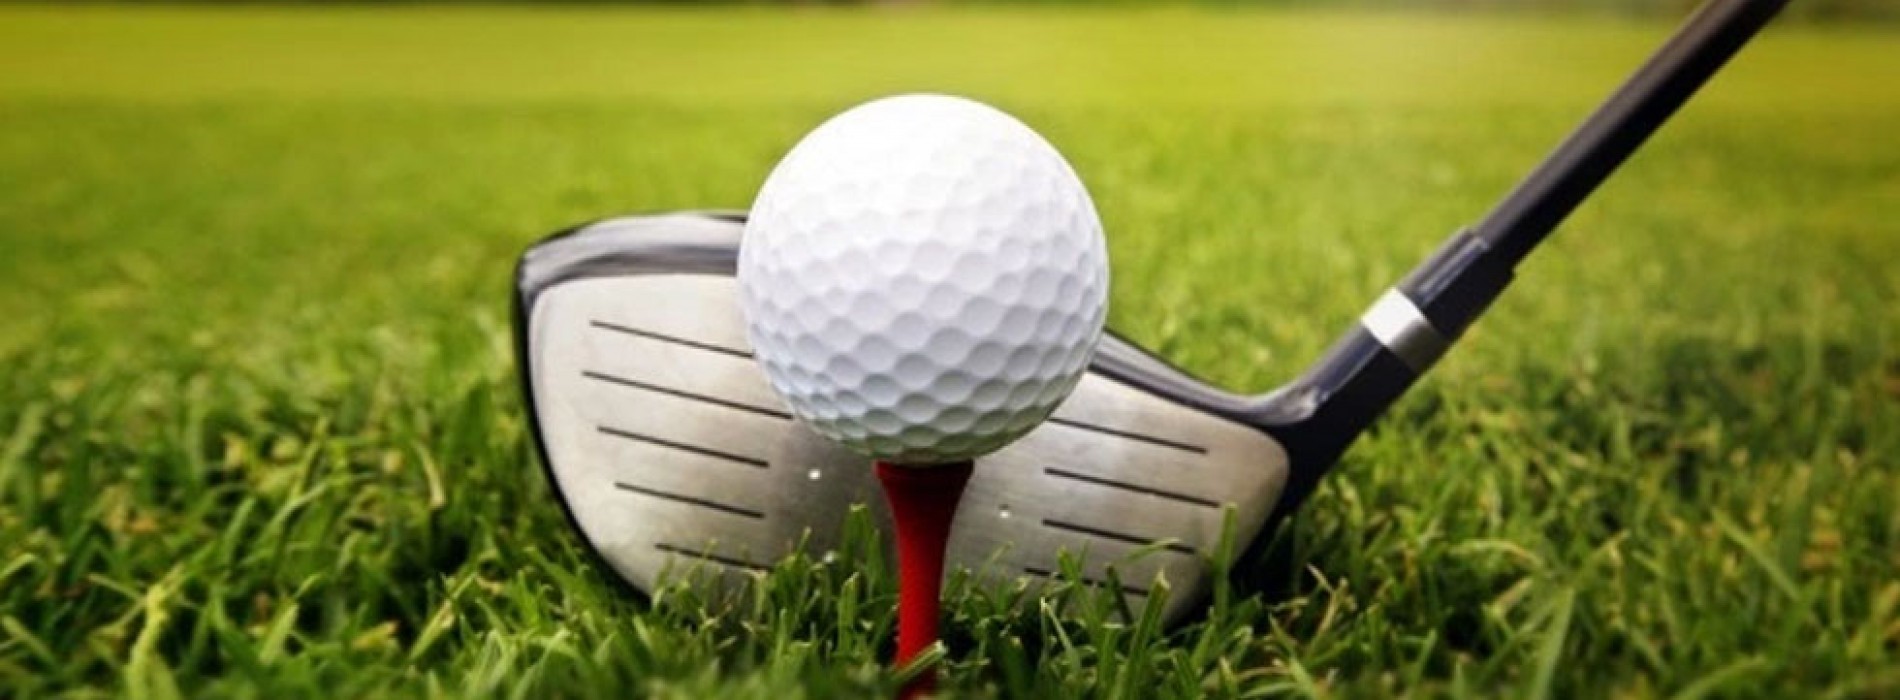 Karnataka to promote golf tourism